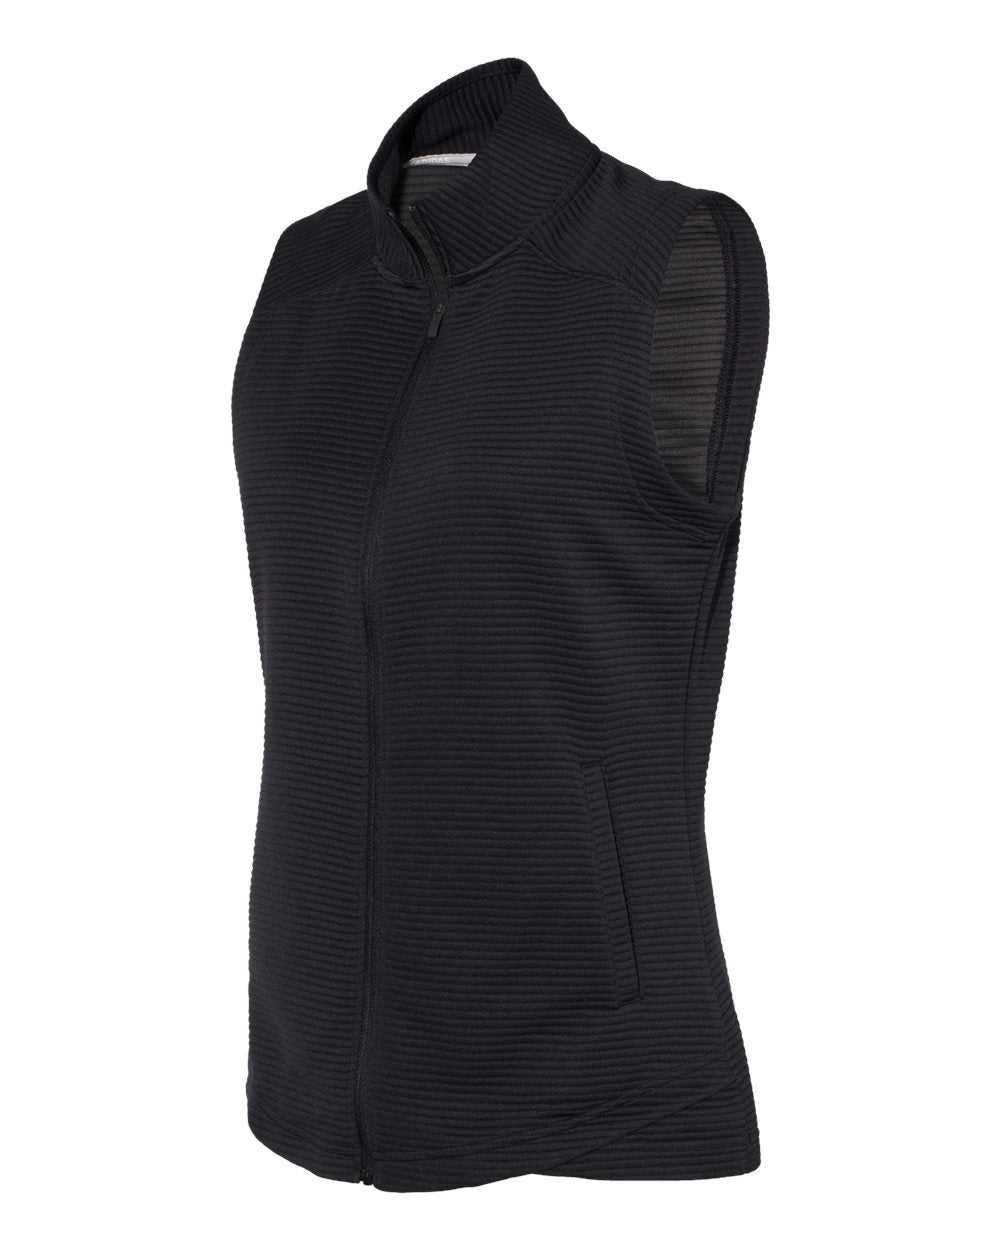 Adidas A417 Women's Textured Full-Zip Vest - Black - HIT a Double